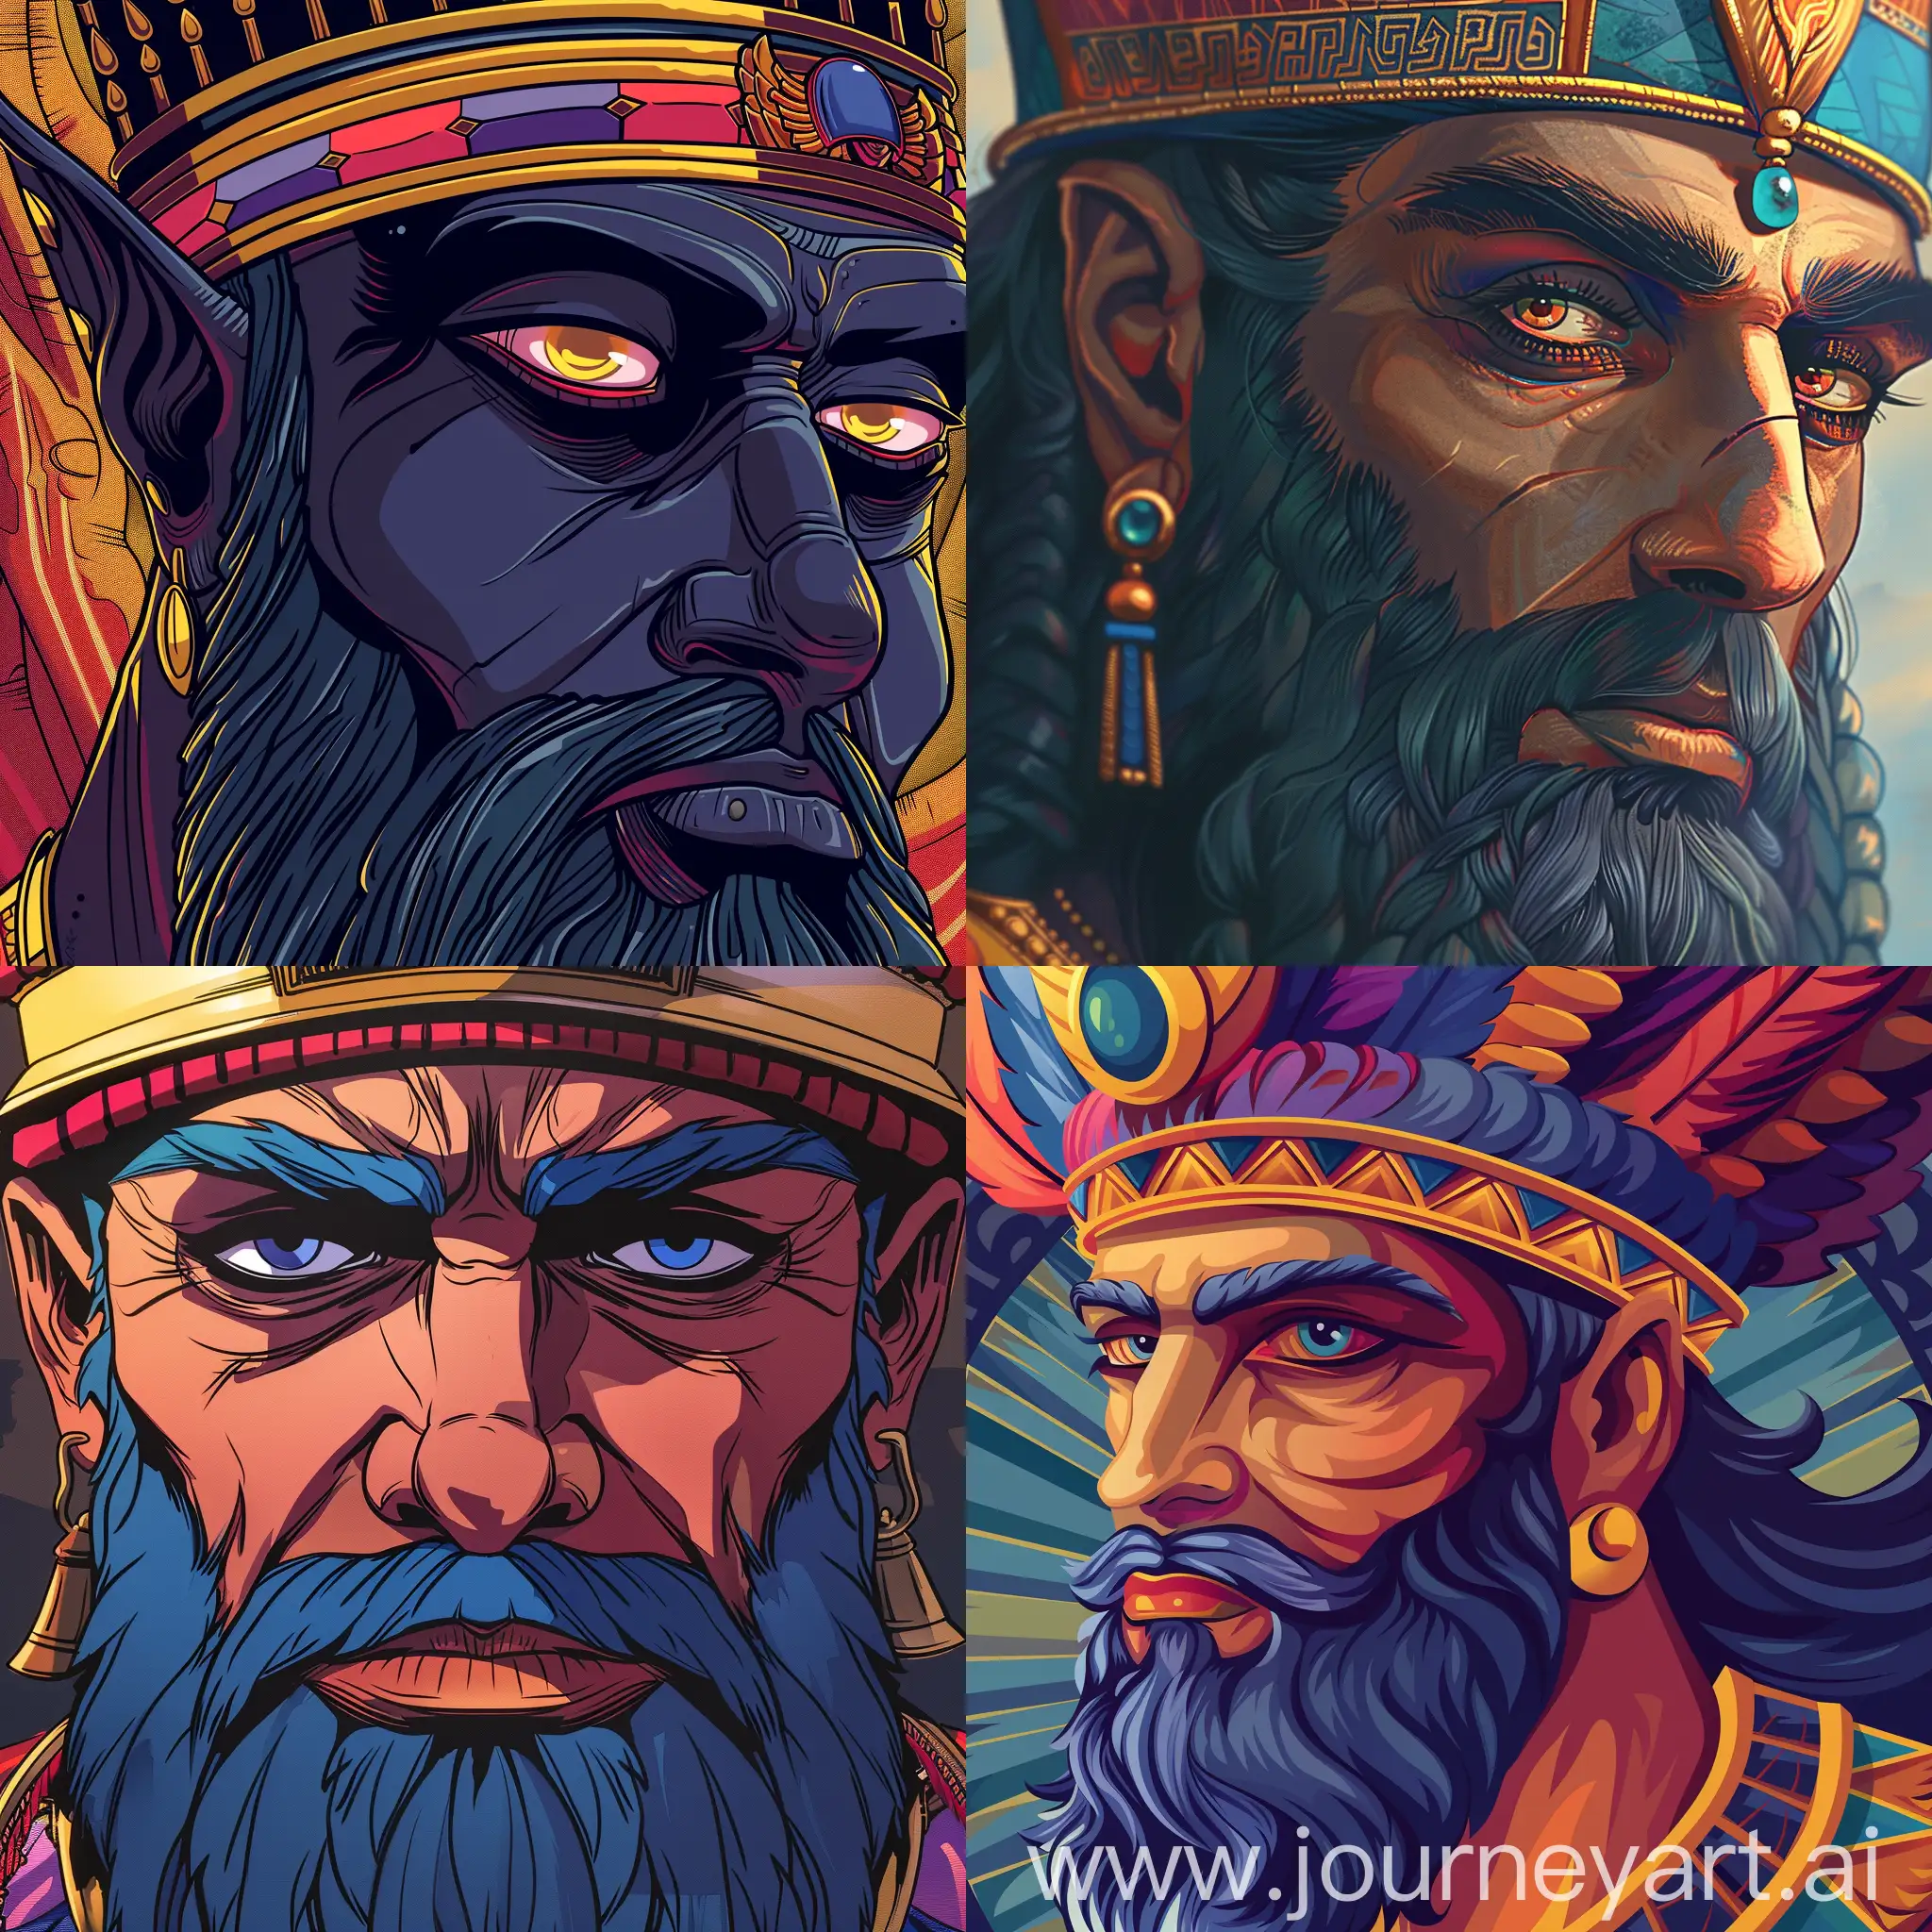 Closeup-Anunnaki-in-Bible-Times-Vibrant-Cartoon-Depiction-of-Ancient-Mythology